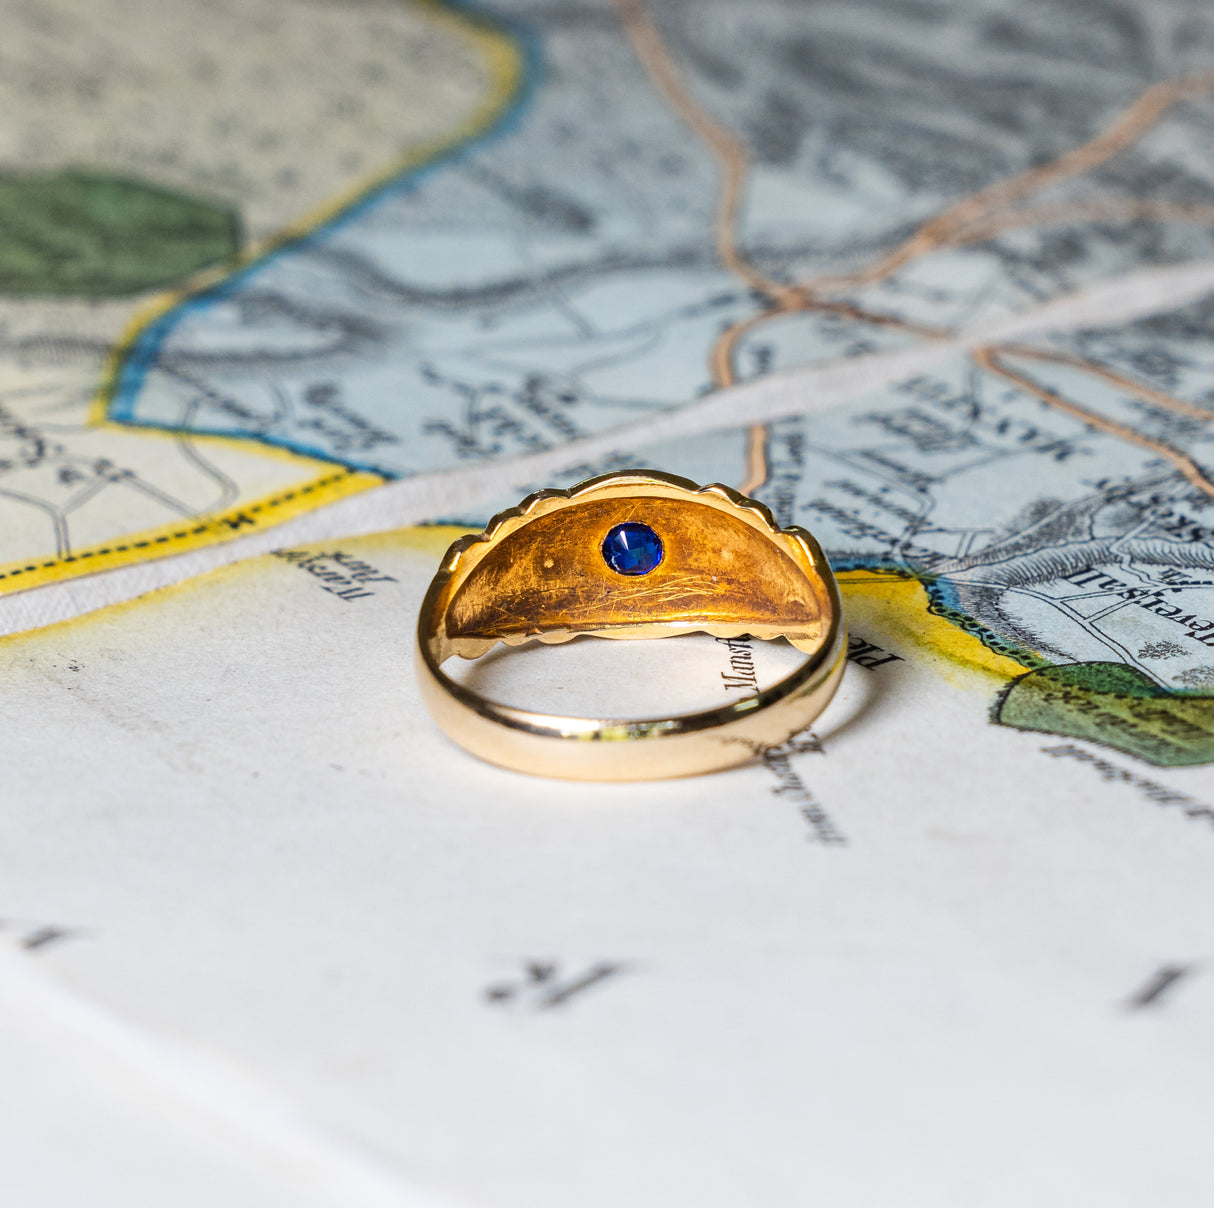 Antique, Edwardian sapphire and diamond three-stone gypsy ring, 18ct yellow gold